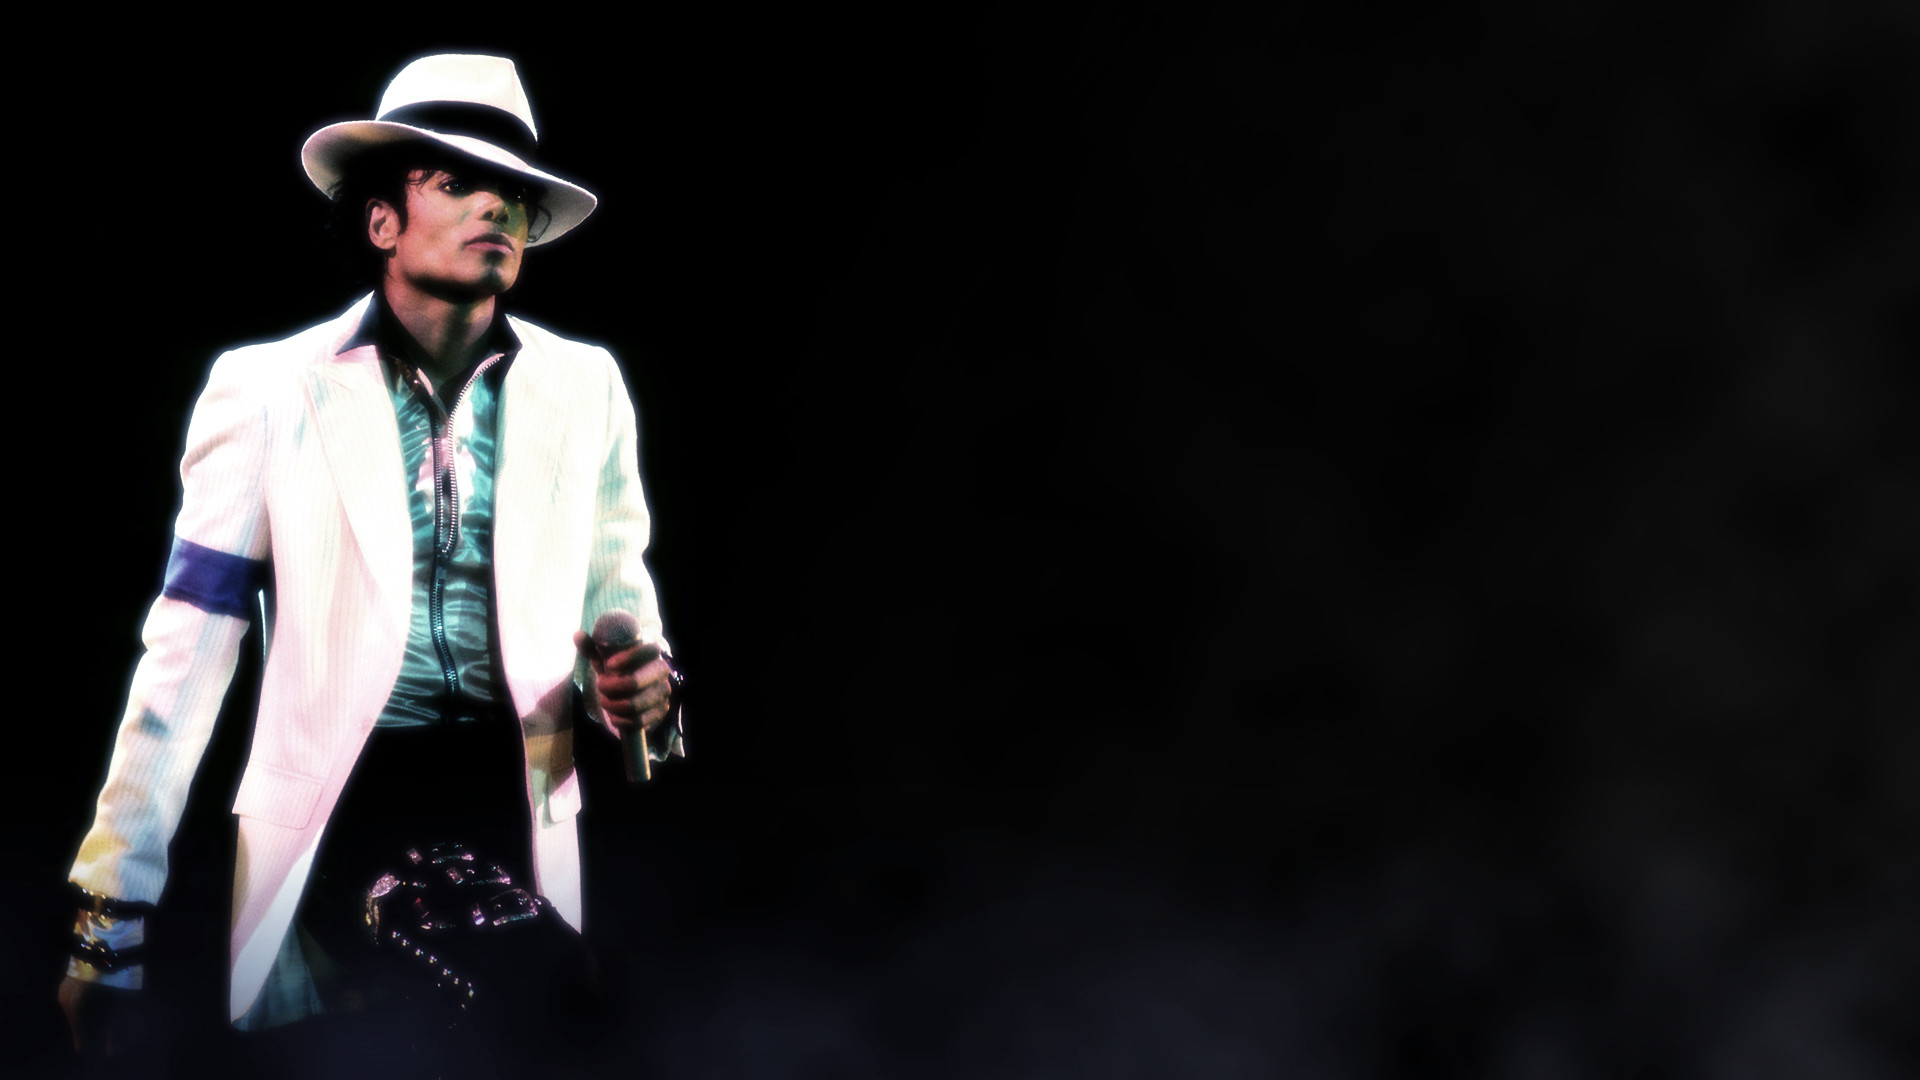 1920x1080 Michael Jackson Pictures